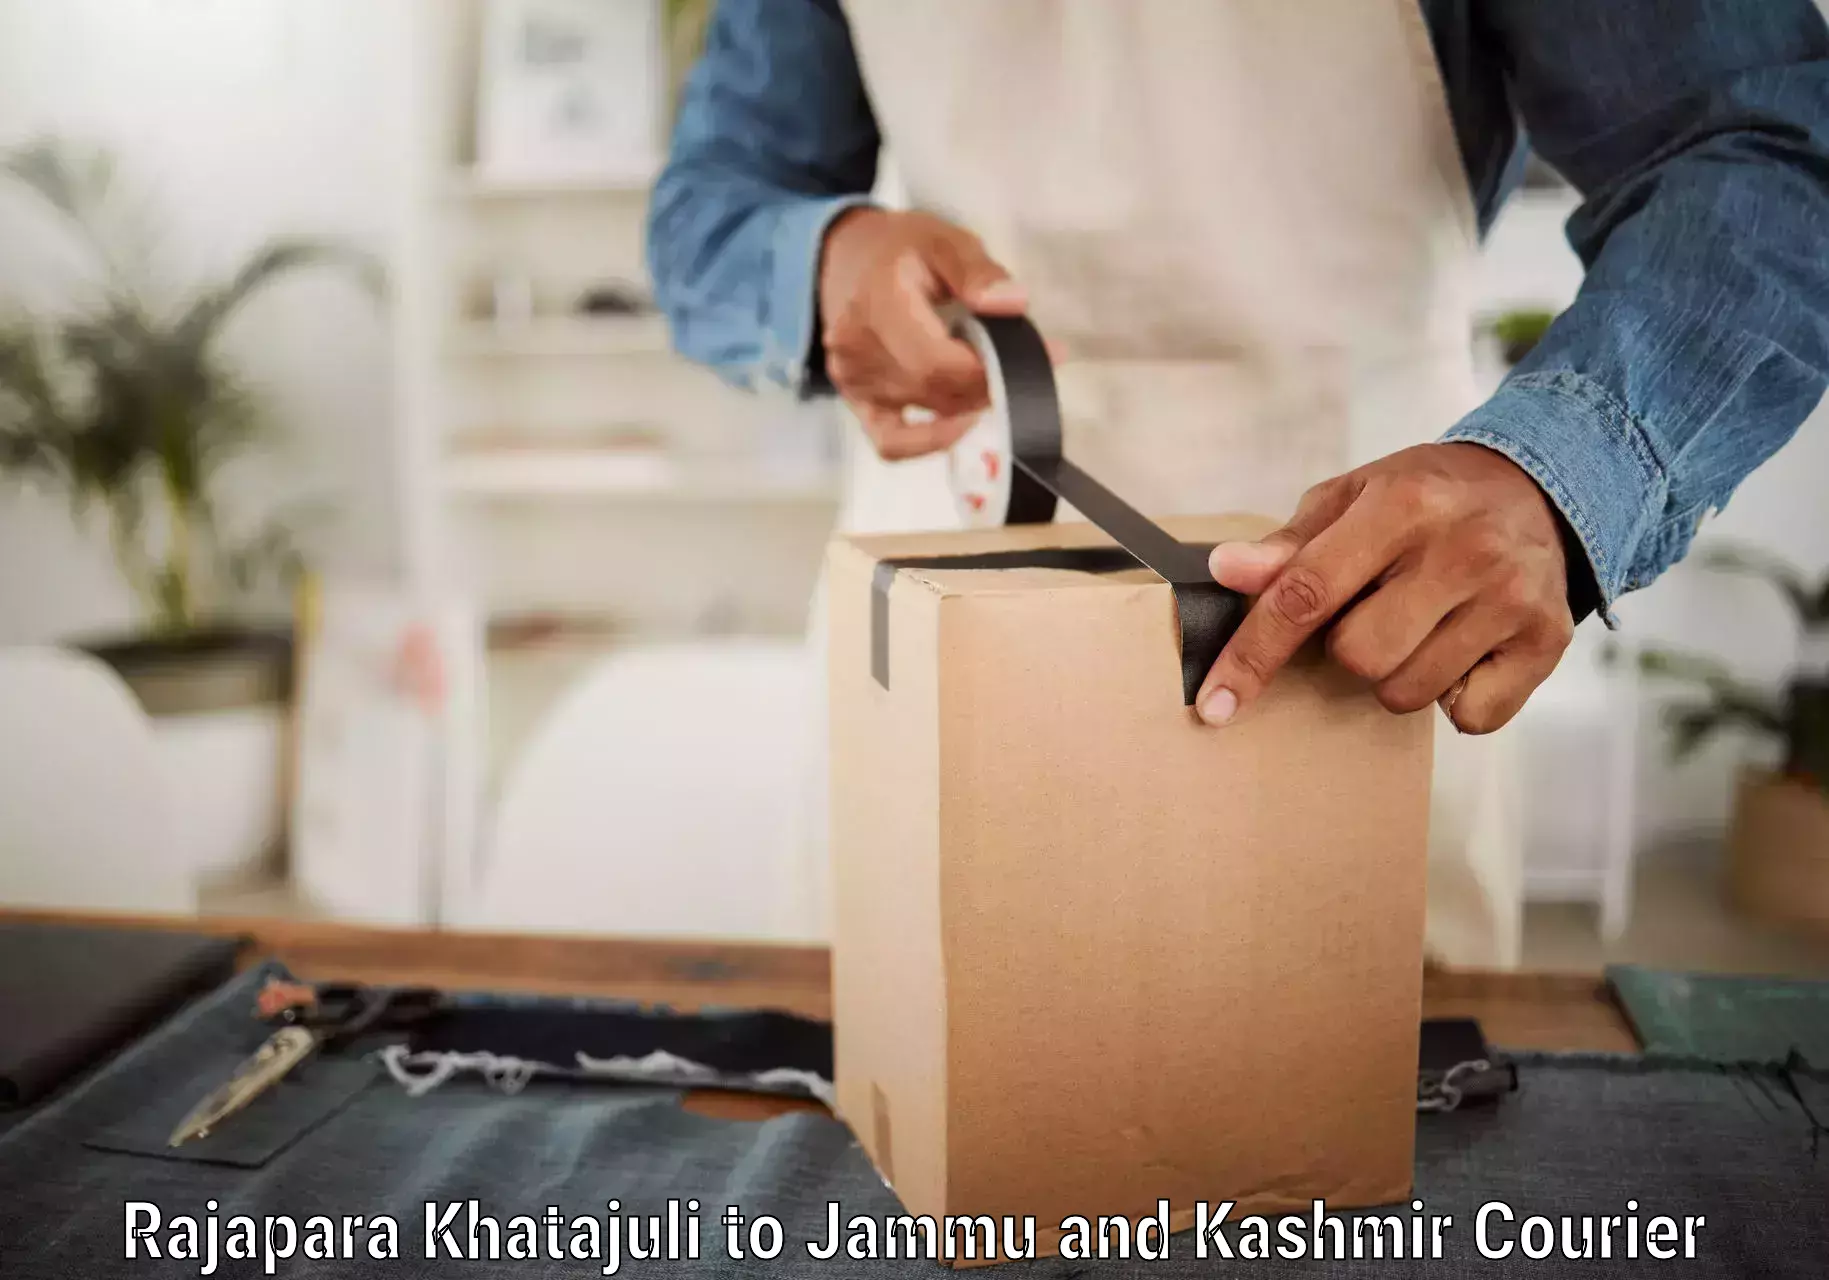 Courier service innovation Rajapara Khatajuli to Srinagar Kashmir